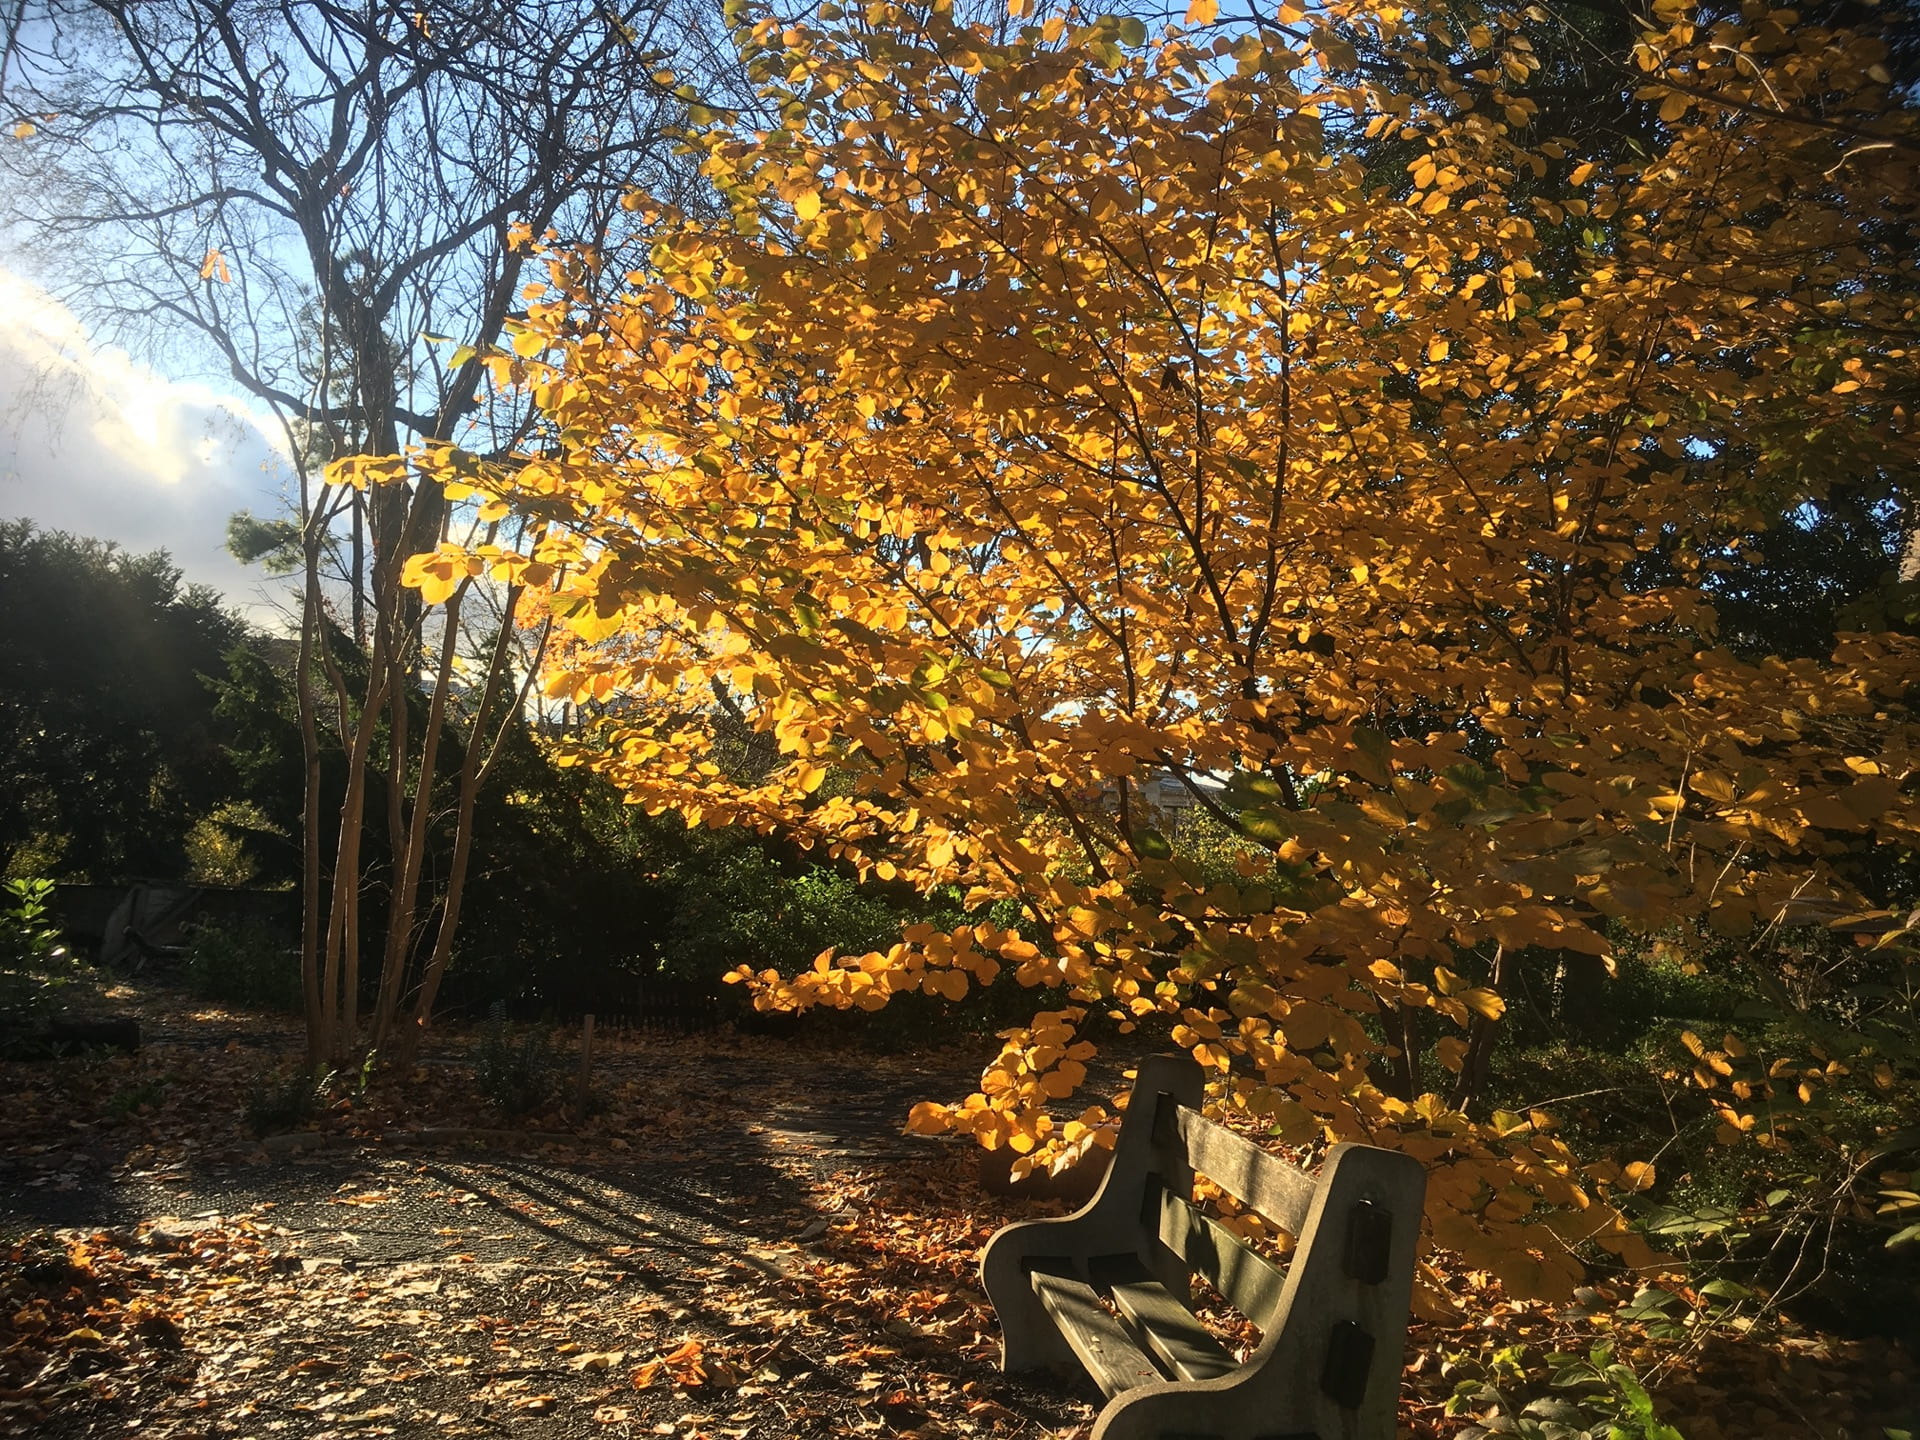 A good spot to soak up the sun and enjoy the fall color of Hamamelis mollis.